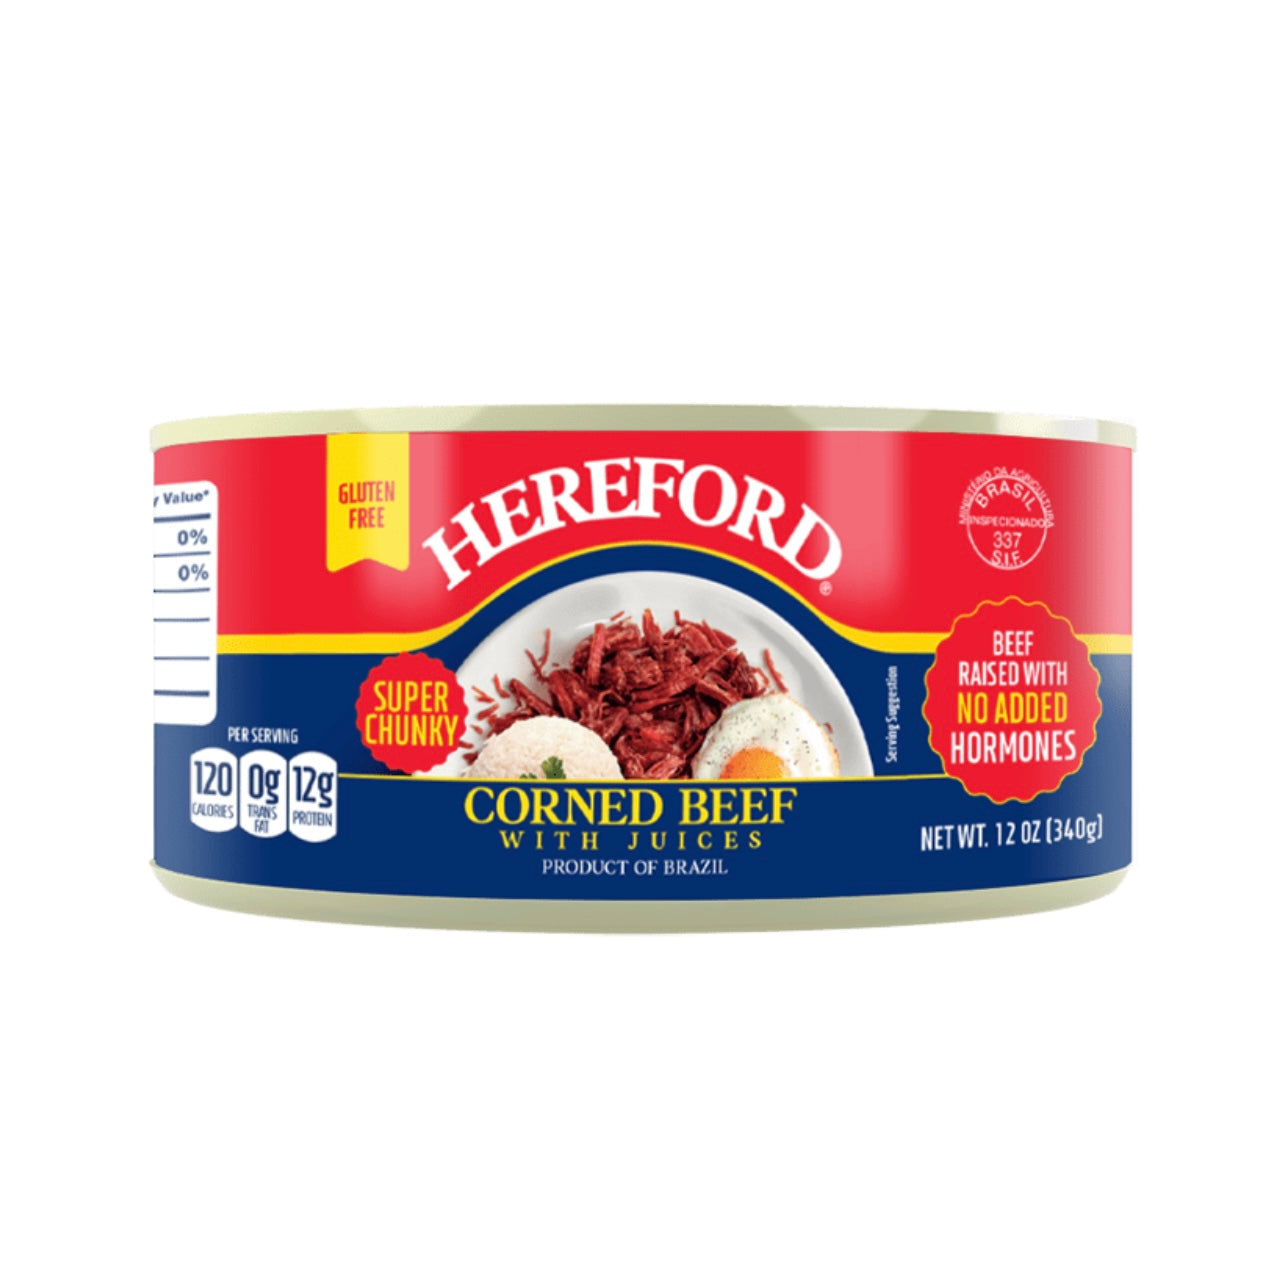 Hereford Corned Beef, Super Chunky